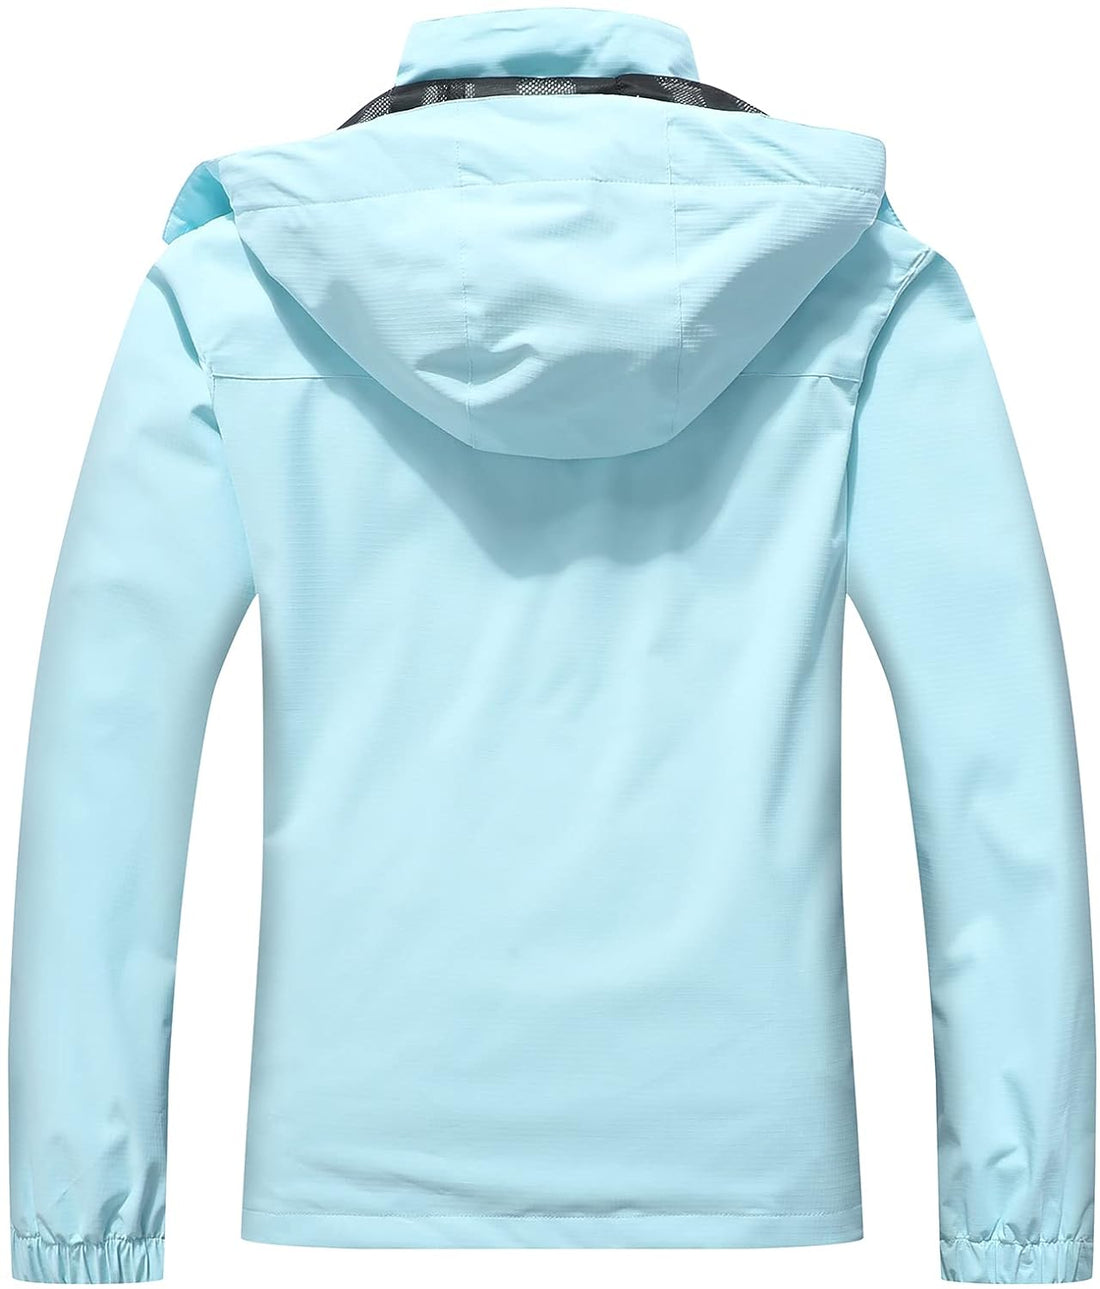 MOERDENG Women's Waterproof Rain Jacket Outdoor Lightweight Hooded Raincoat for Hiking Travel, Light Green-05, Medium